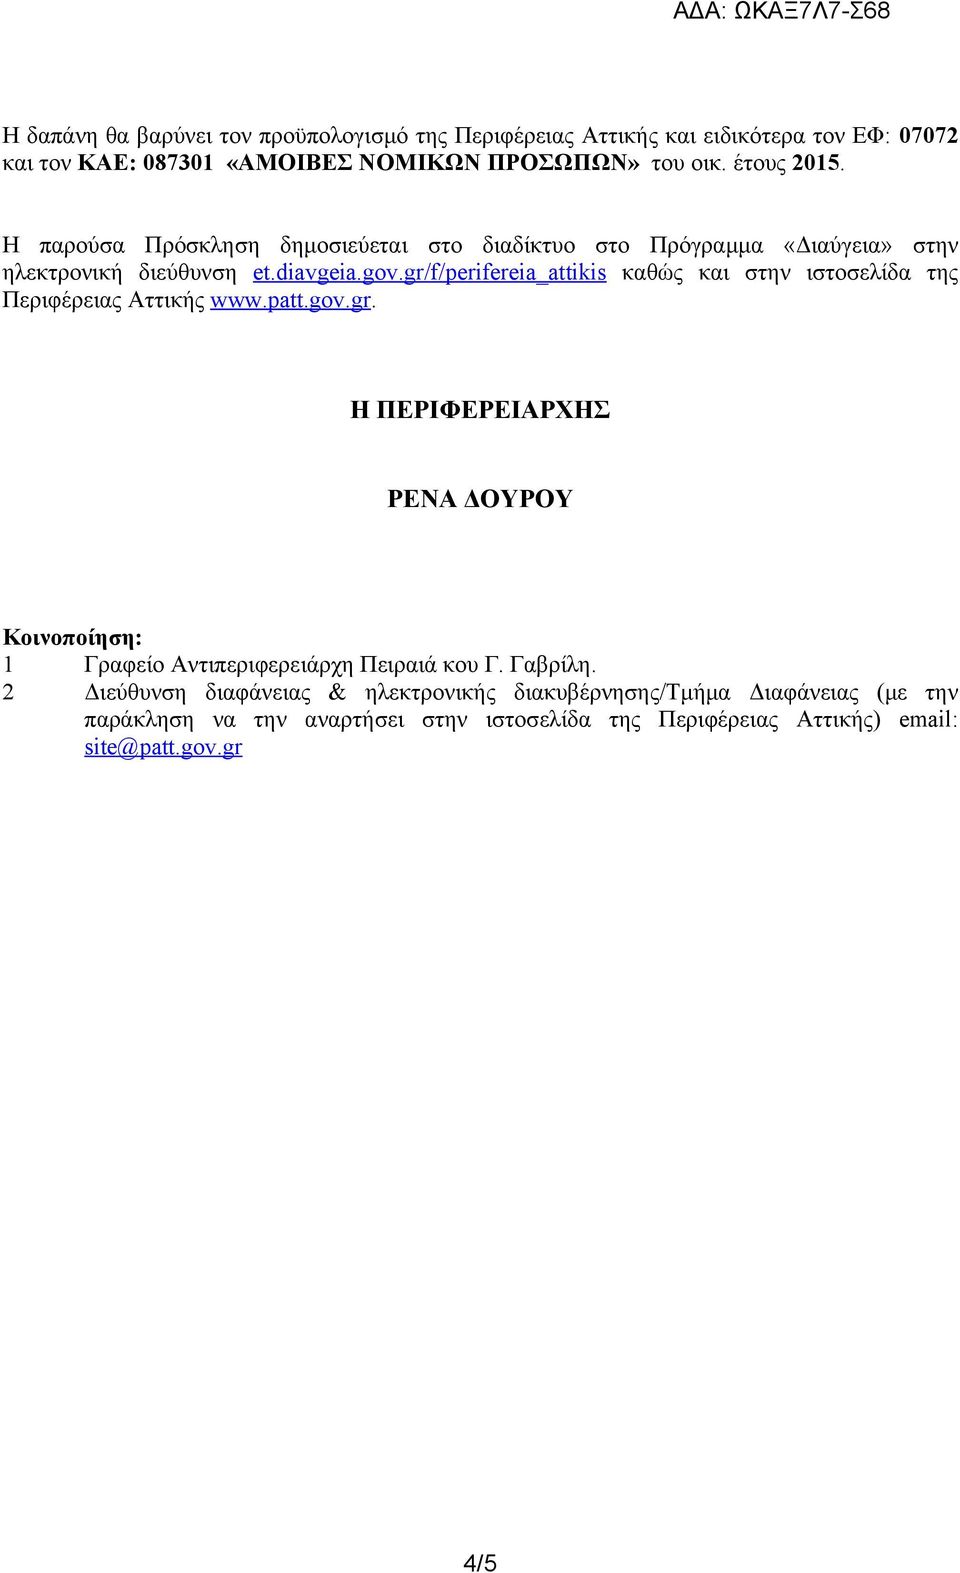 gr/f/perifereia_attikis καθώς και στην ιστοσελίδα της Περιφέρειας Αττικής www.patt.gov.gr. Η ΠΕΡΙΦΕΡΕΙΑΡΧΗΣ ΡΕΝΑ ΔΟΥΡΟΥ Κοινοποίηση: 1 Γραφείο Αντιπεριφερειάρχη Πειραιά κου Γ.